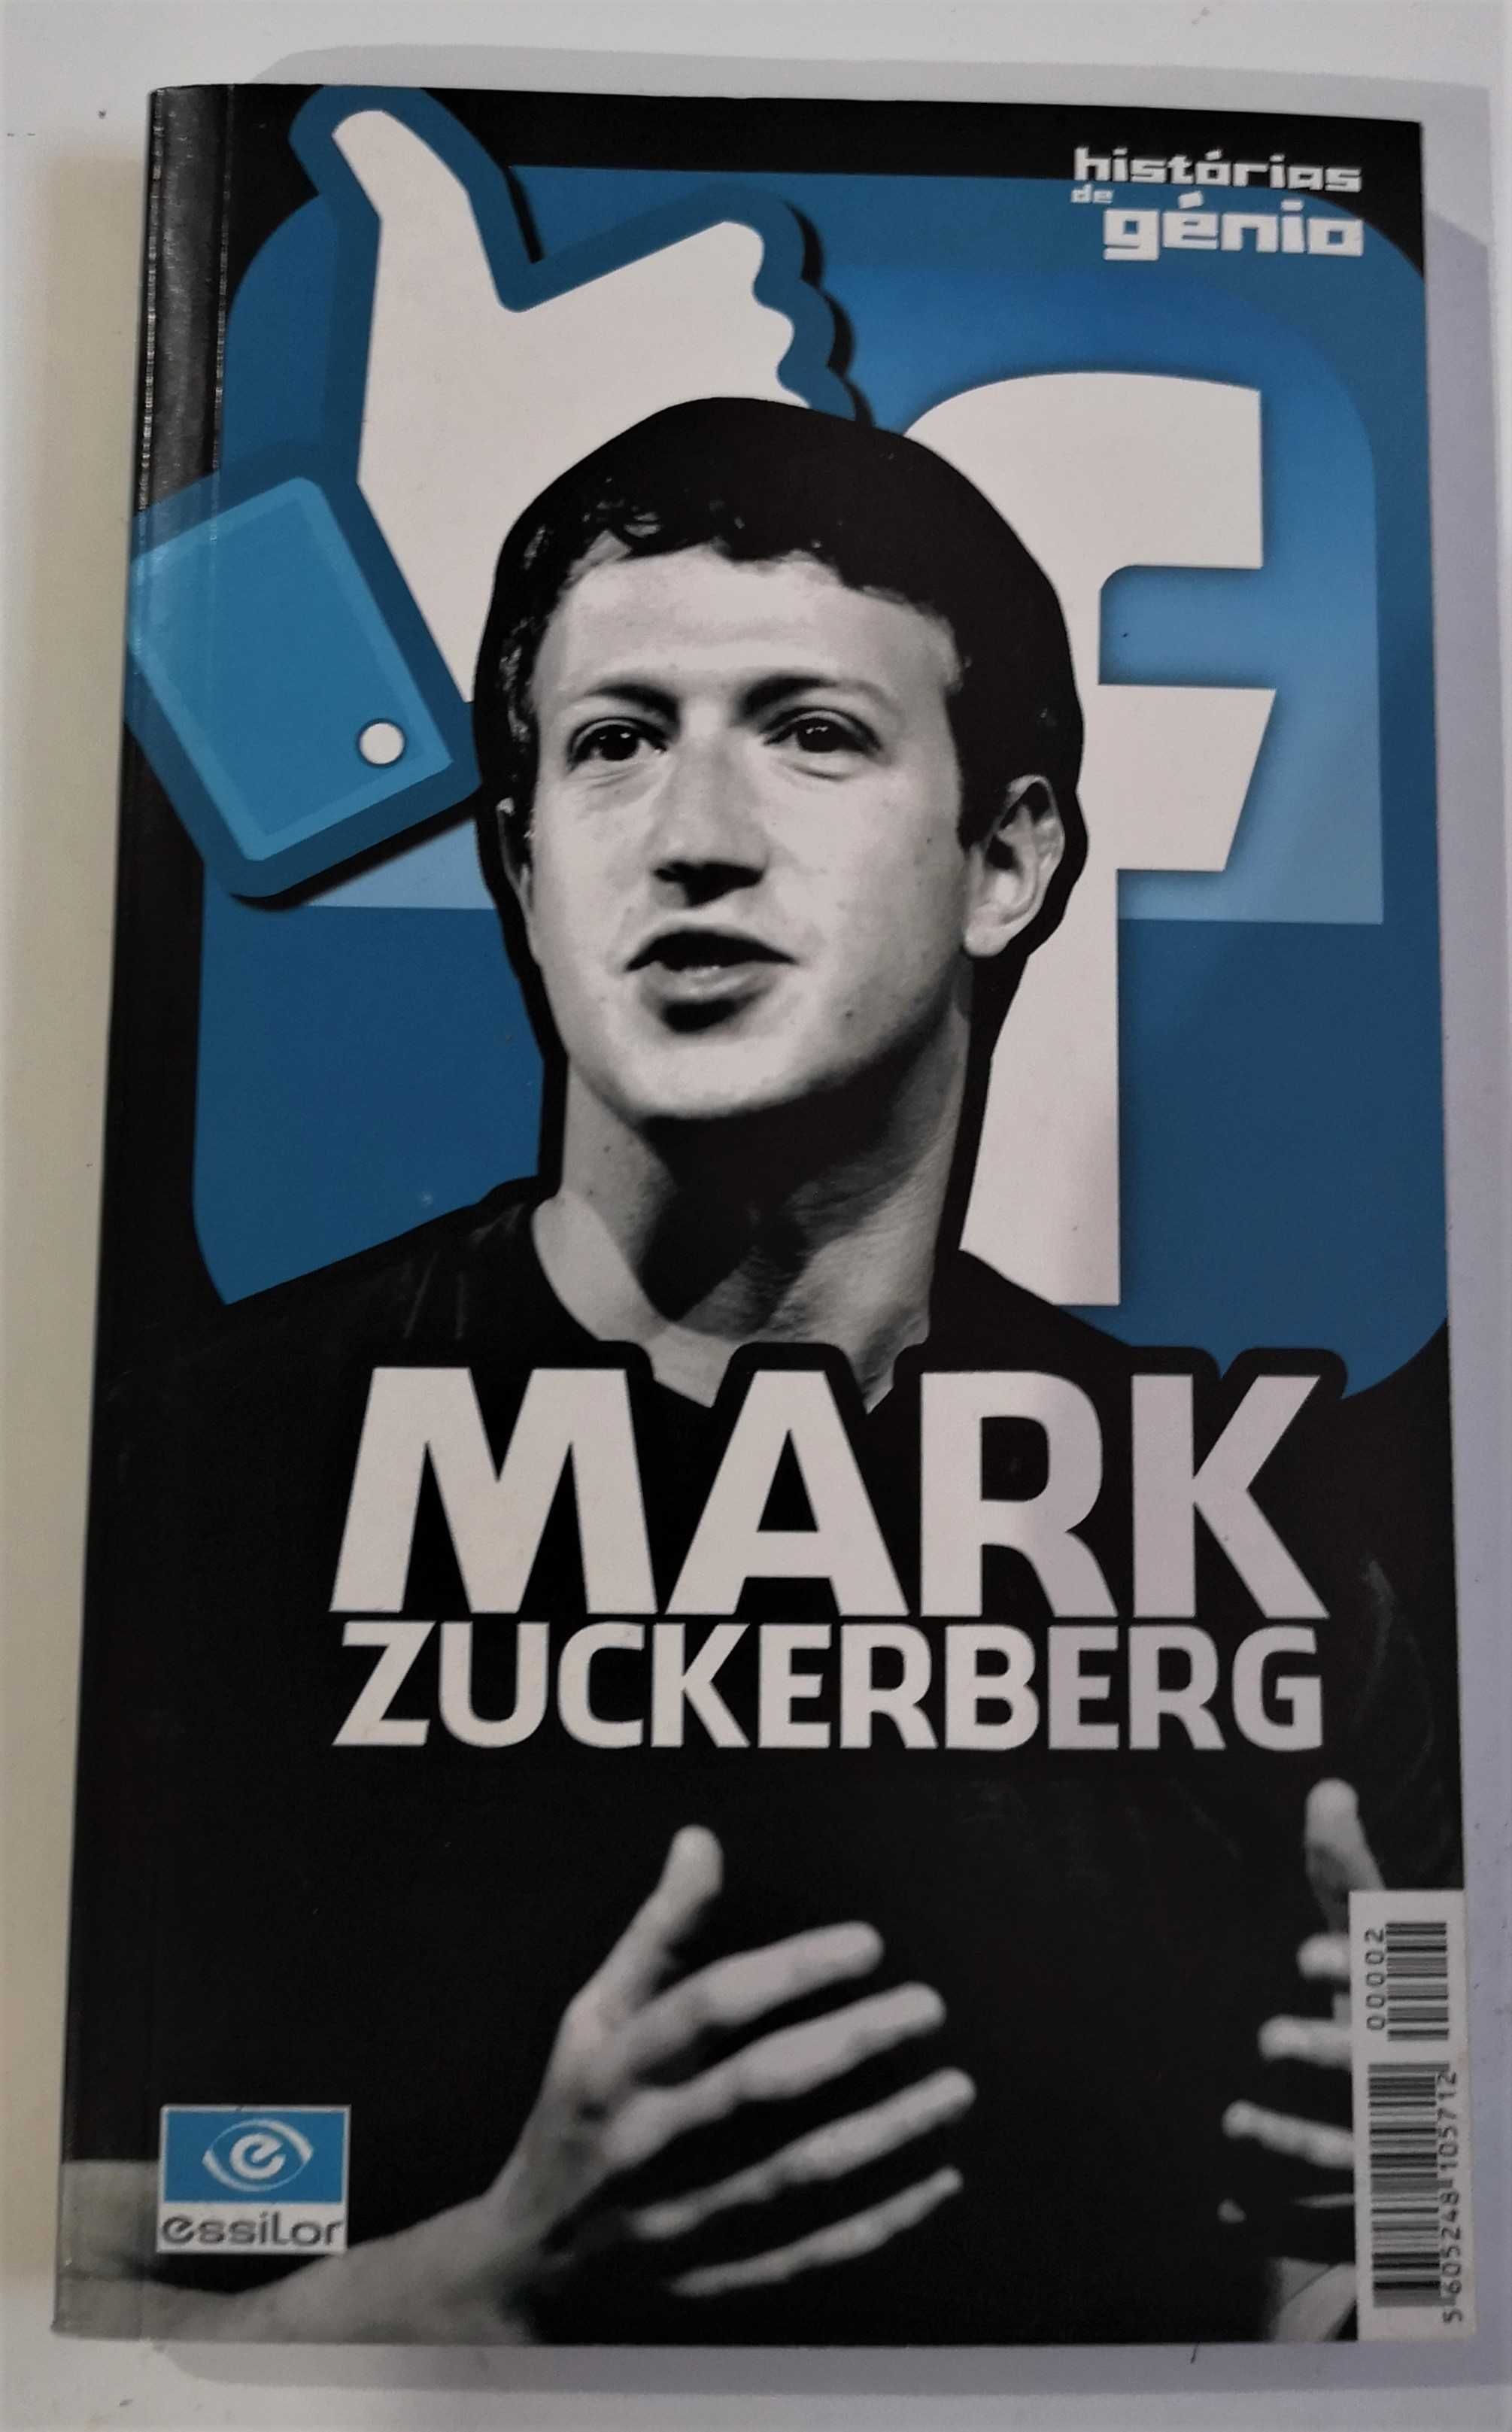 2 Livros. "História de Génios"-Zuckerberg, Steve Jobs,